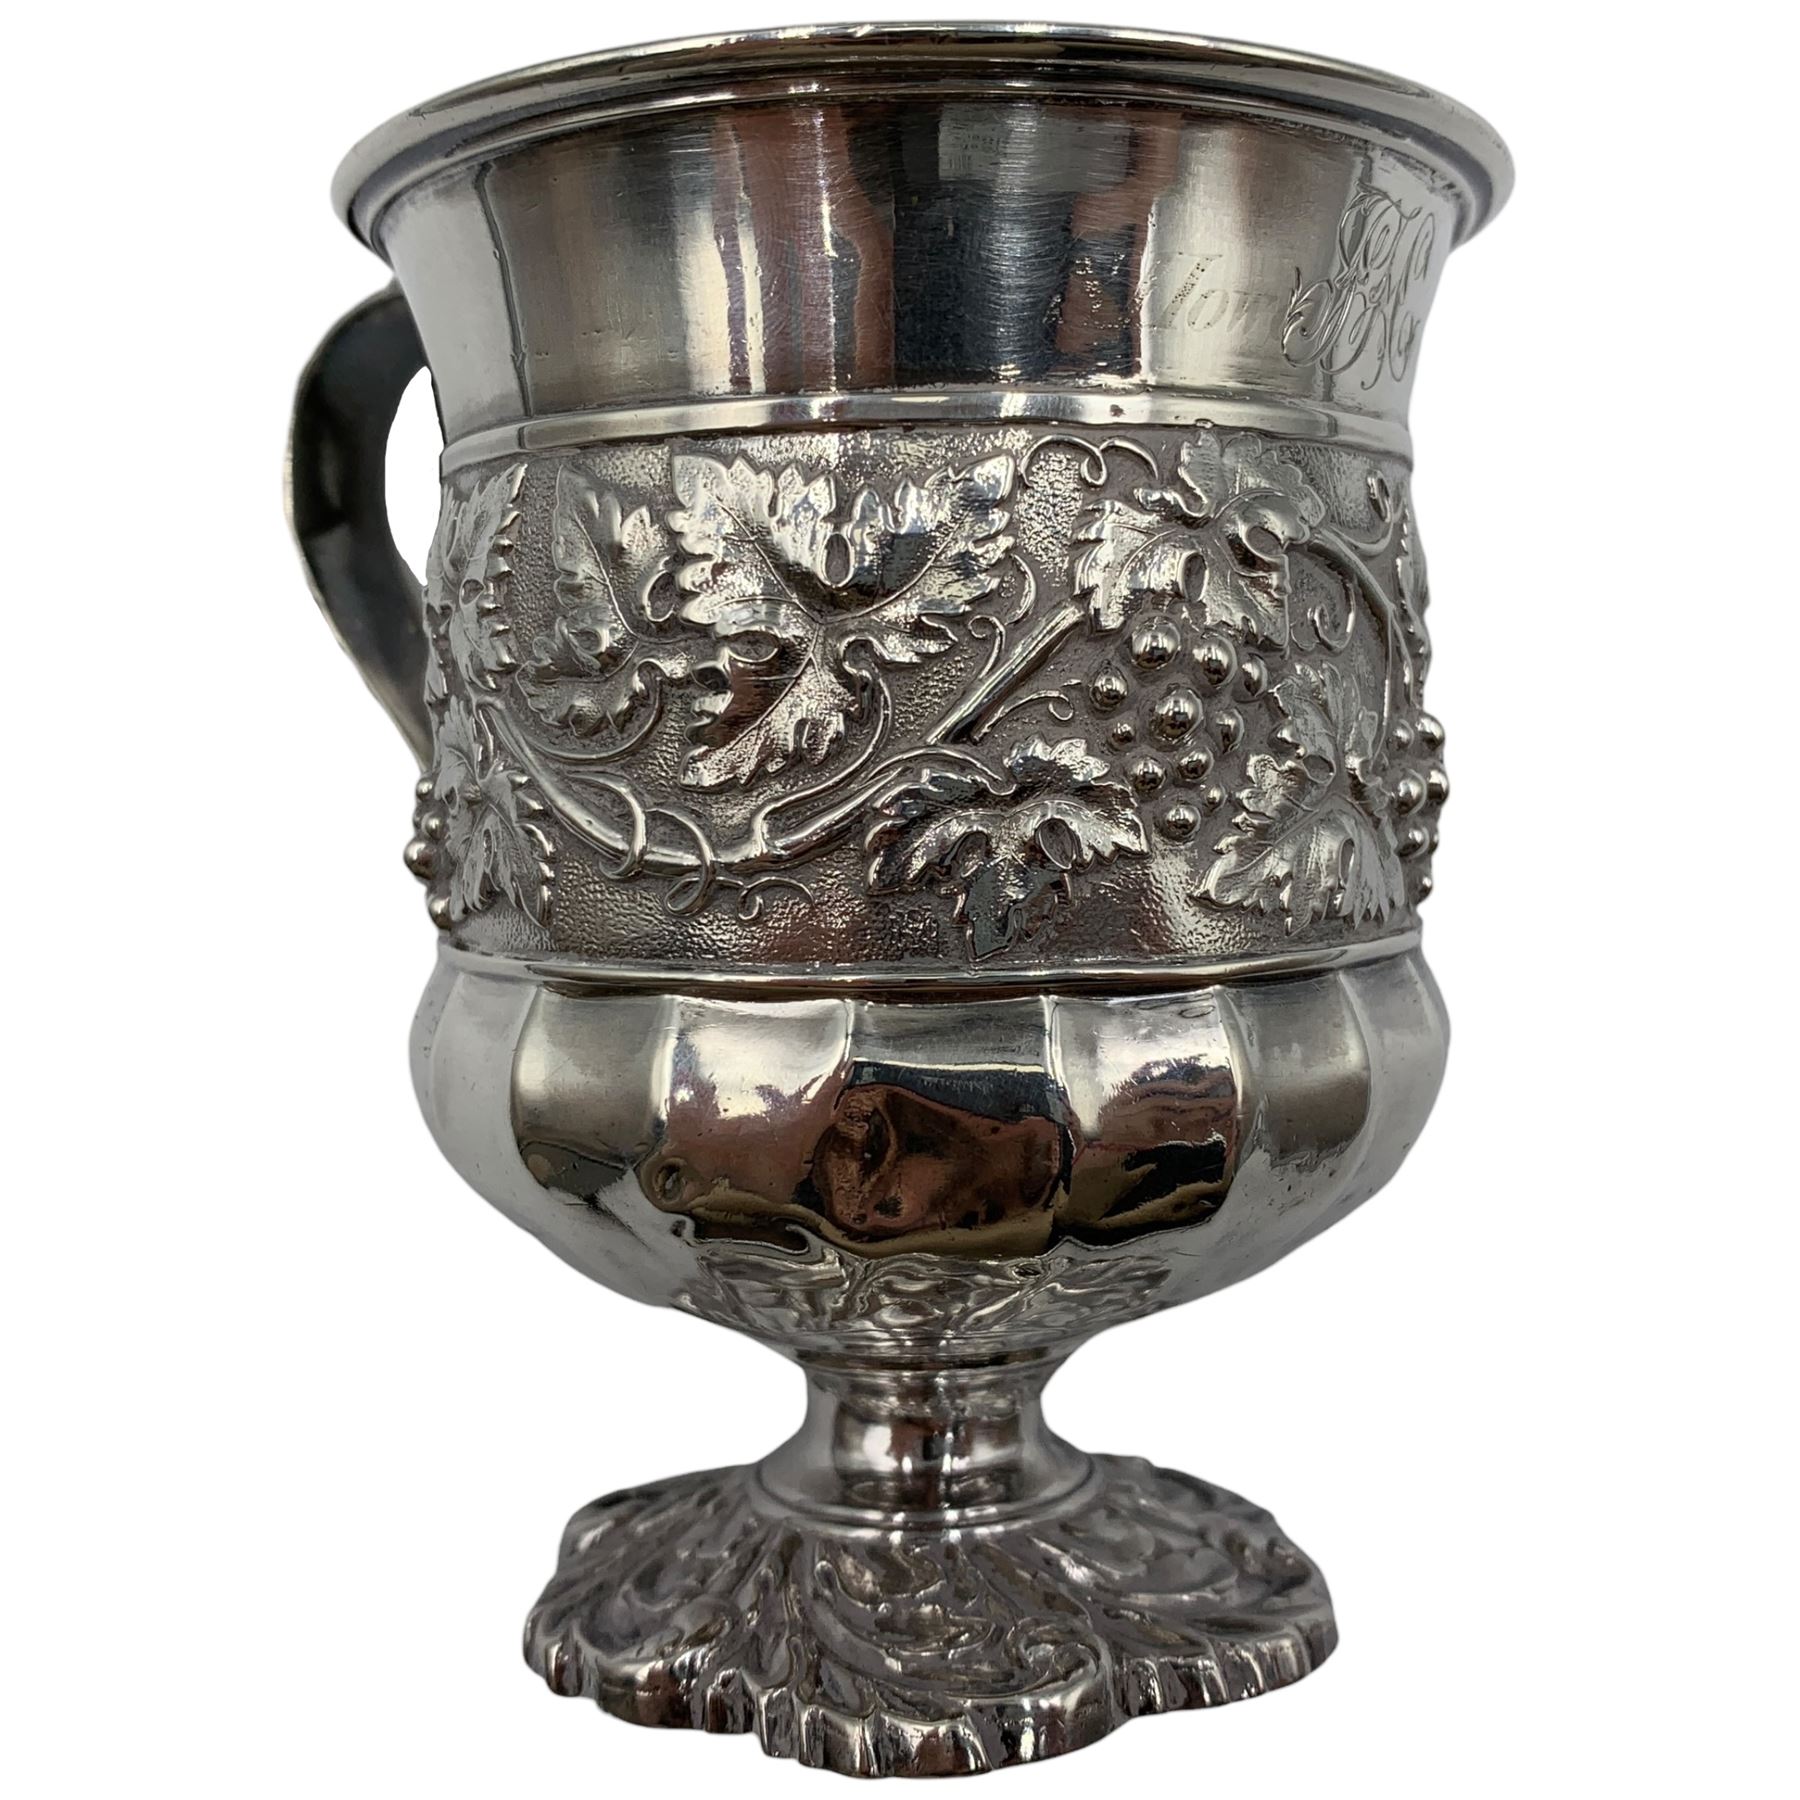 George III silver mug with leaf capped handle - Image 2 of 4